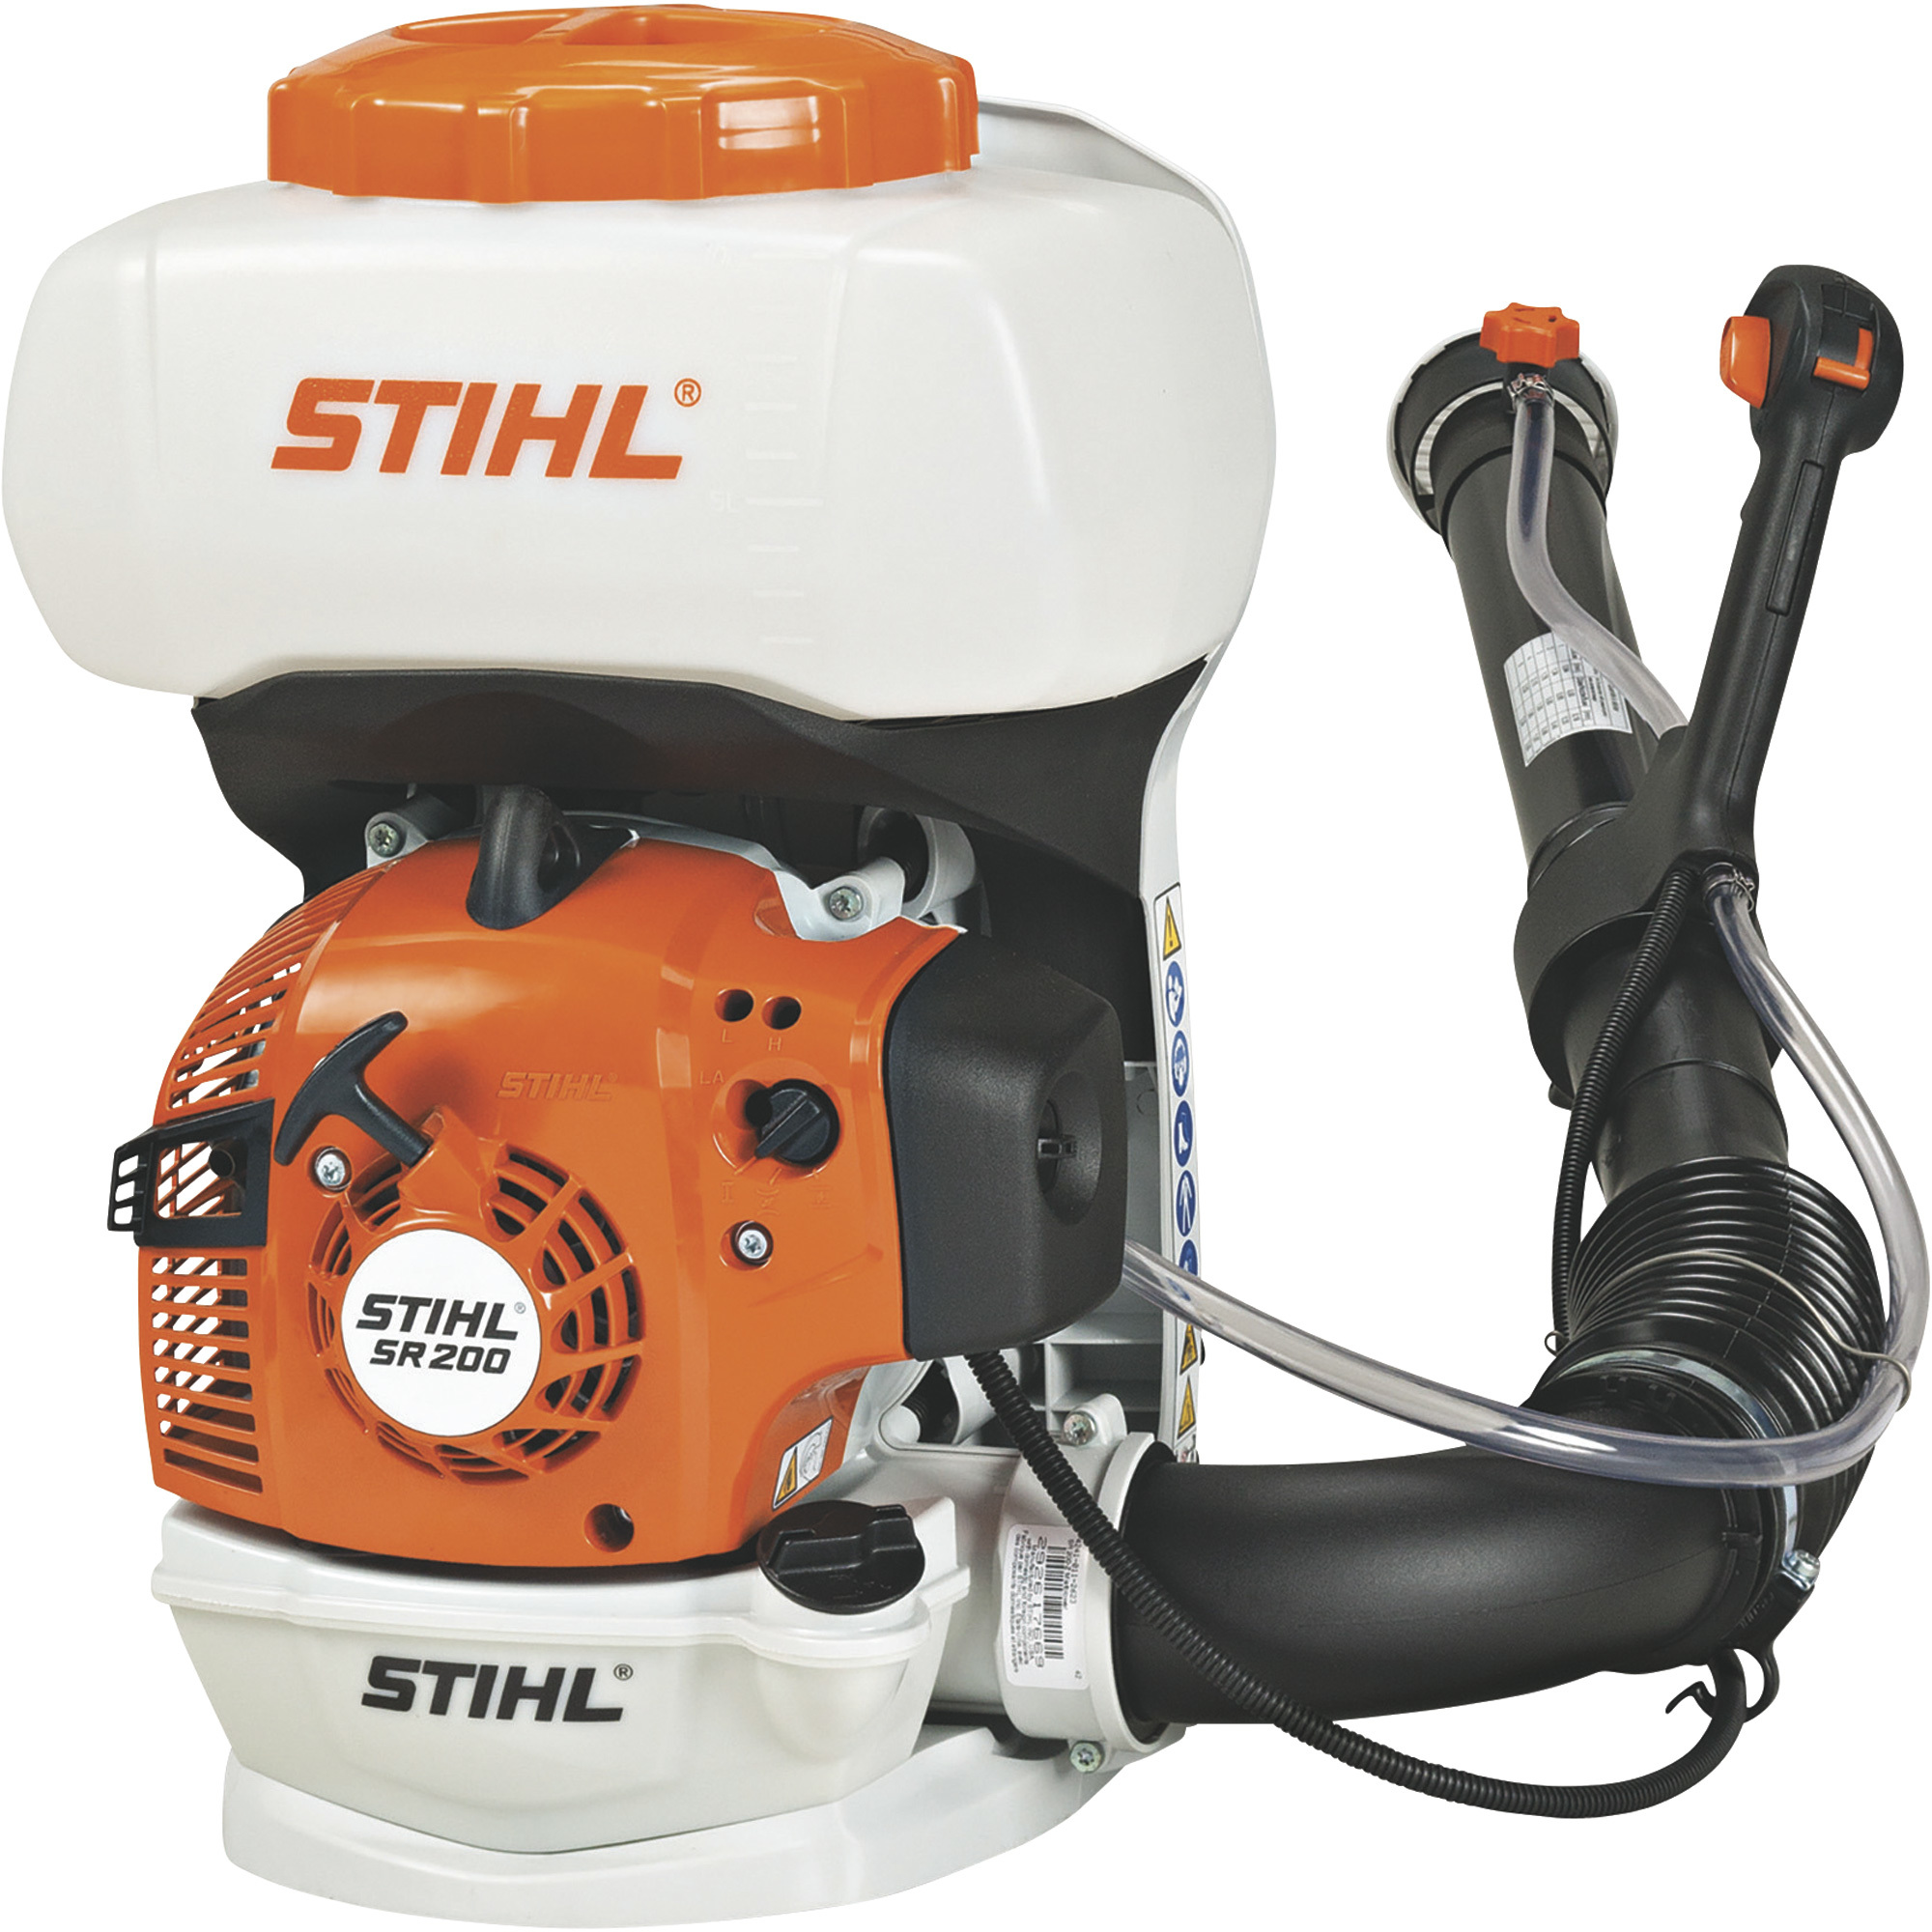 Stihl Portable Disinfectant Backpack Sprayer / Fogger â 2.1-Gallon Capacity, 27.2cc, Model SR 200